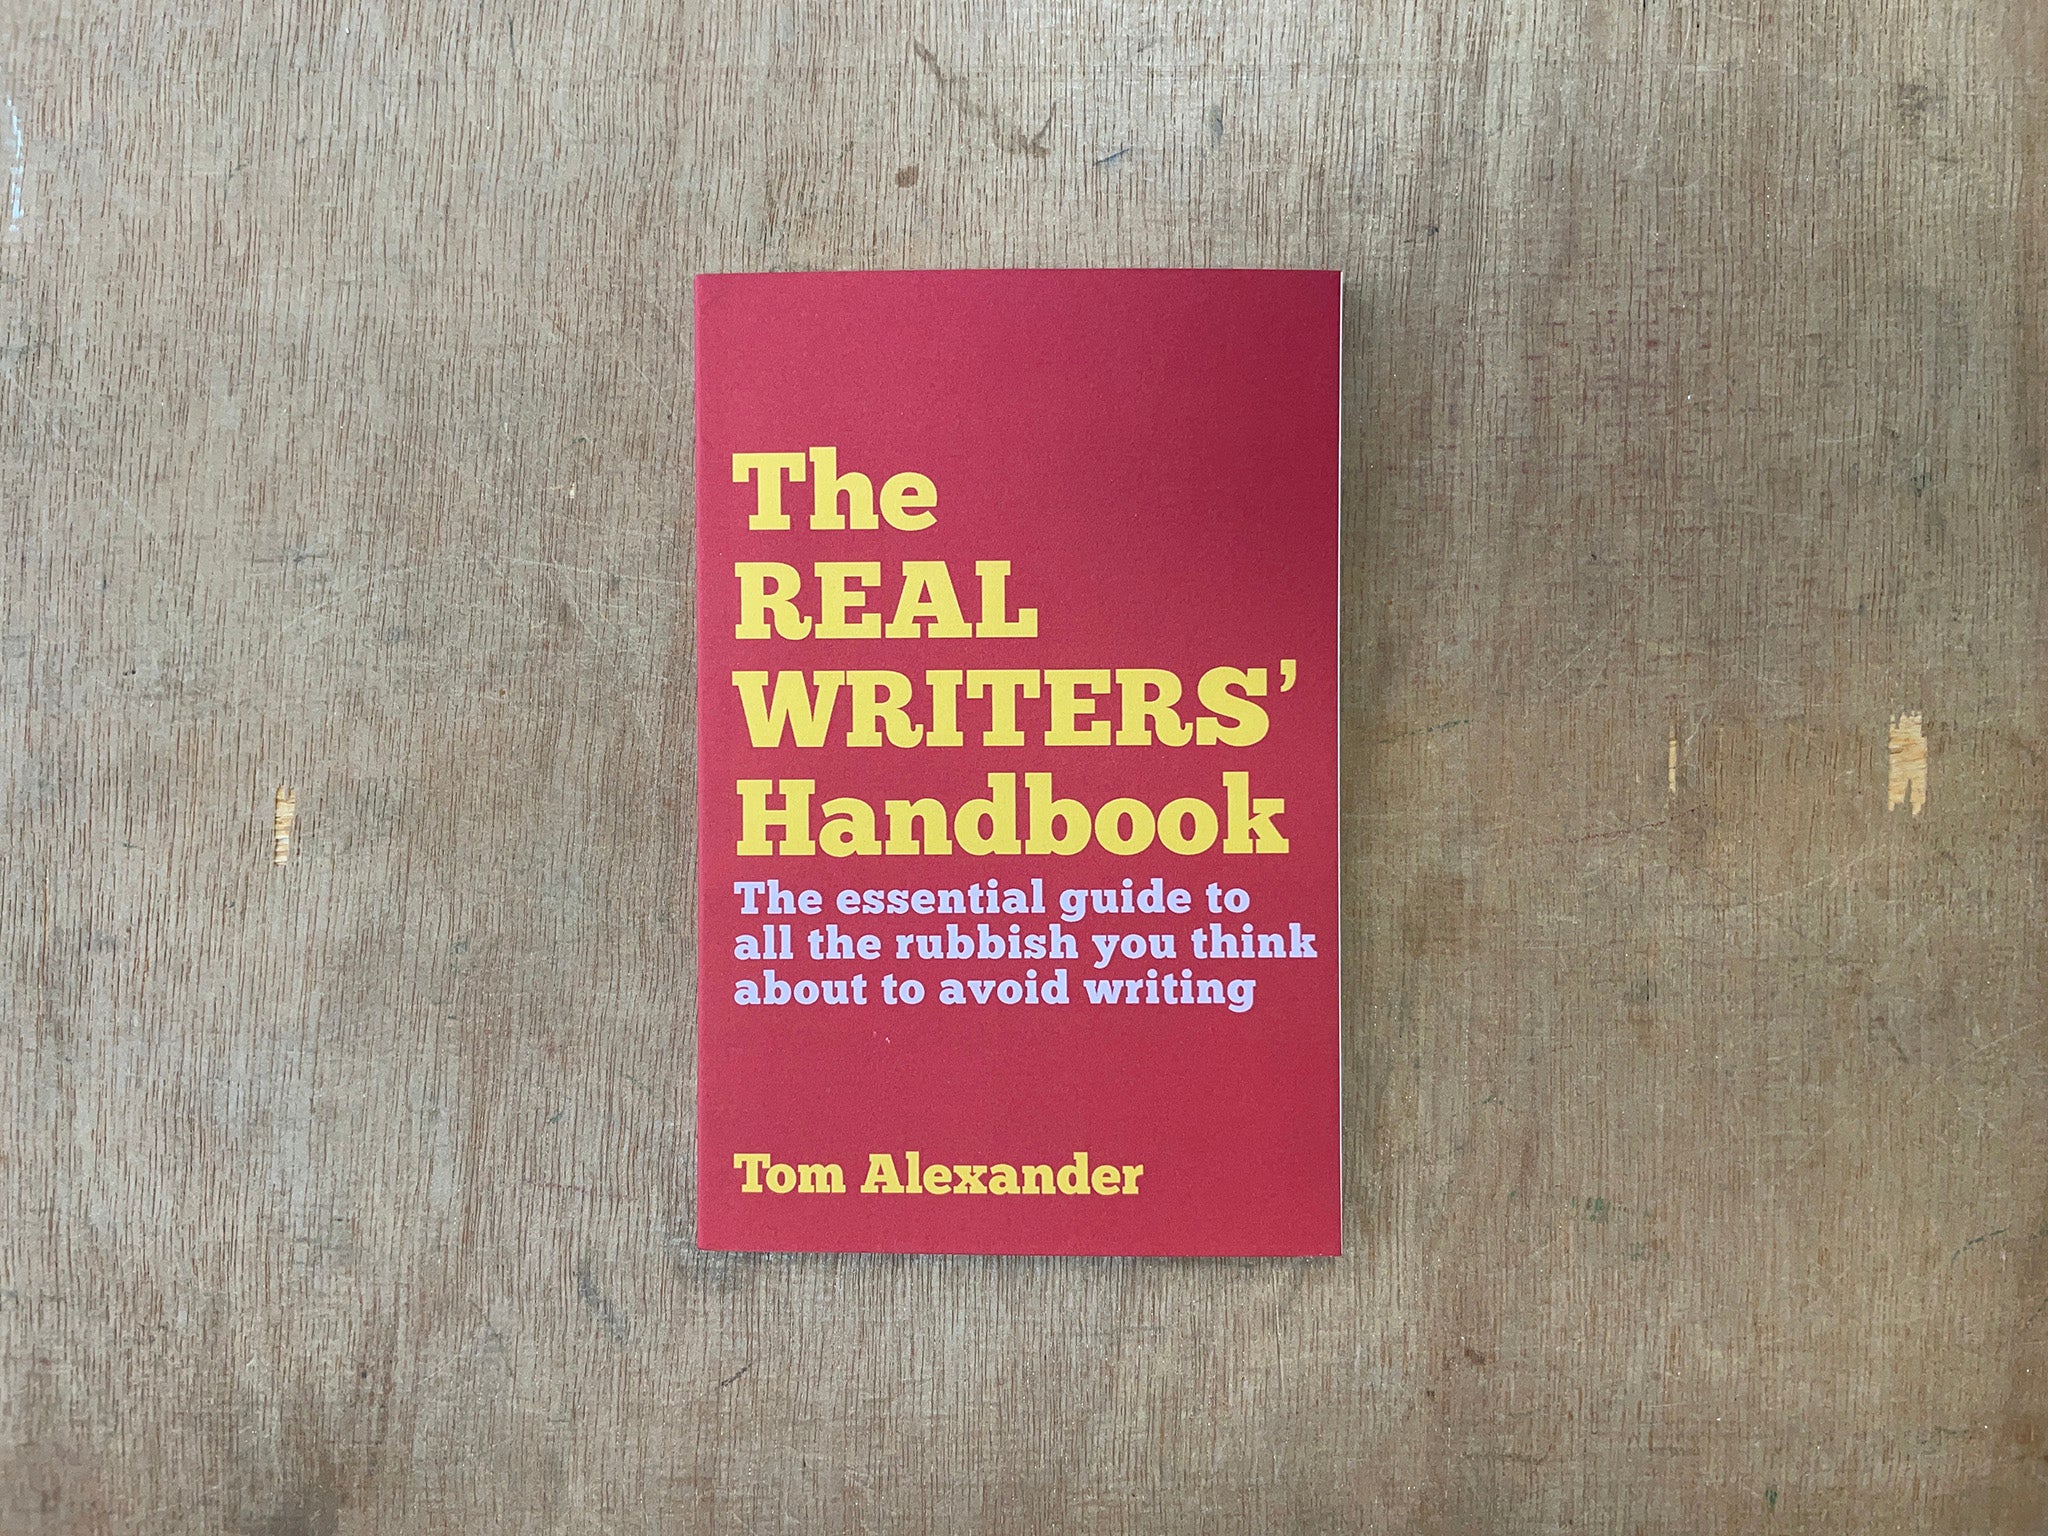 THE REAL WRITERS' HANDBOOK by Tom Alexander